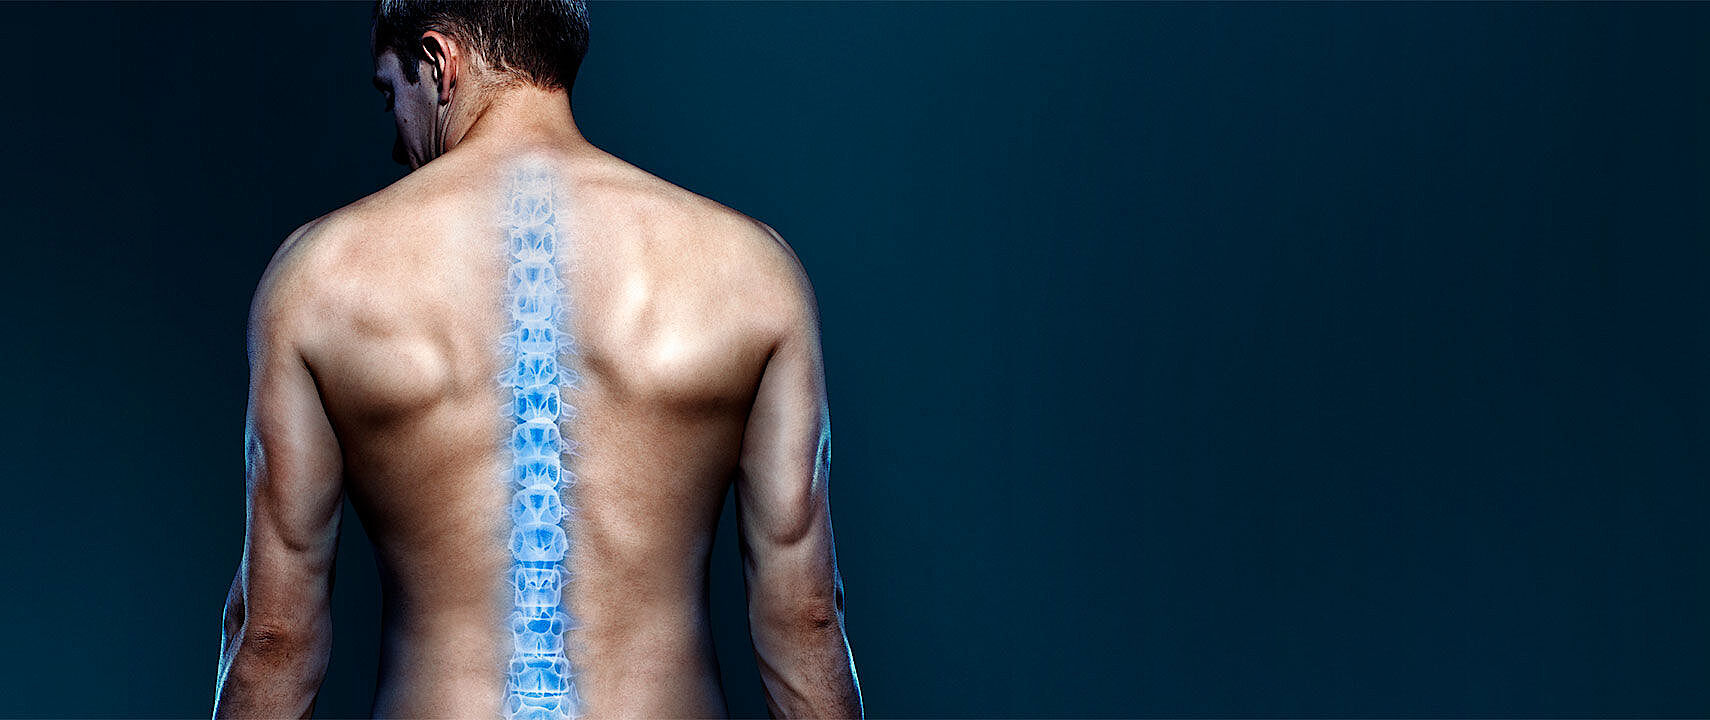 Illustrated backbone over person's back